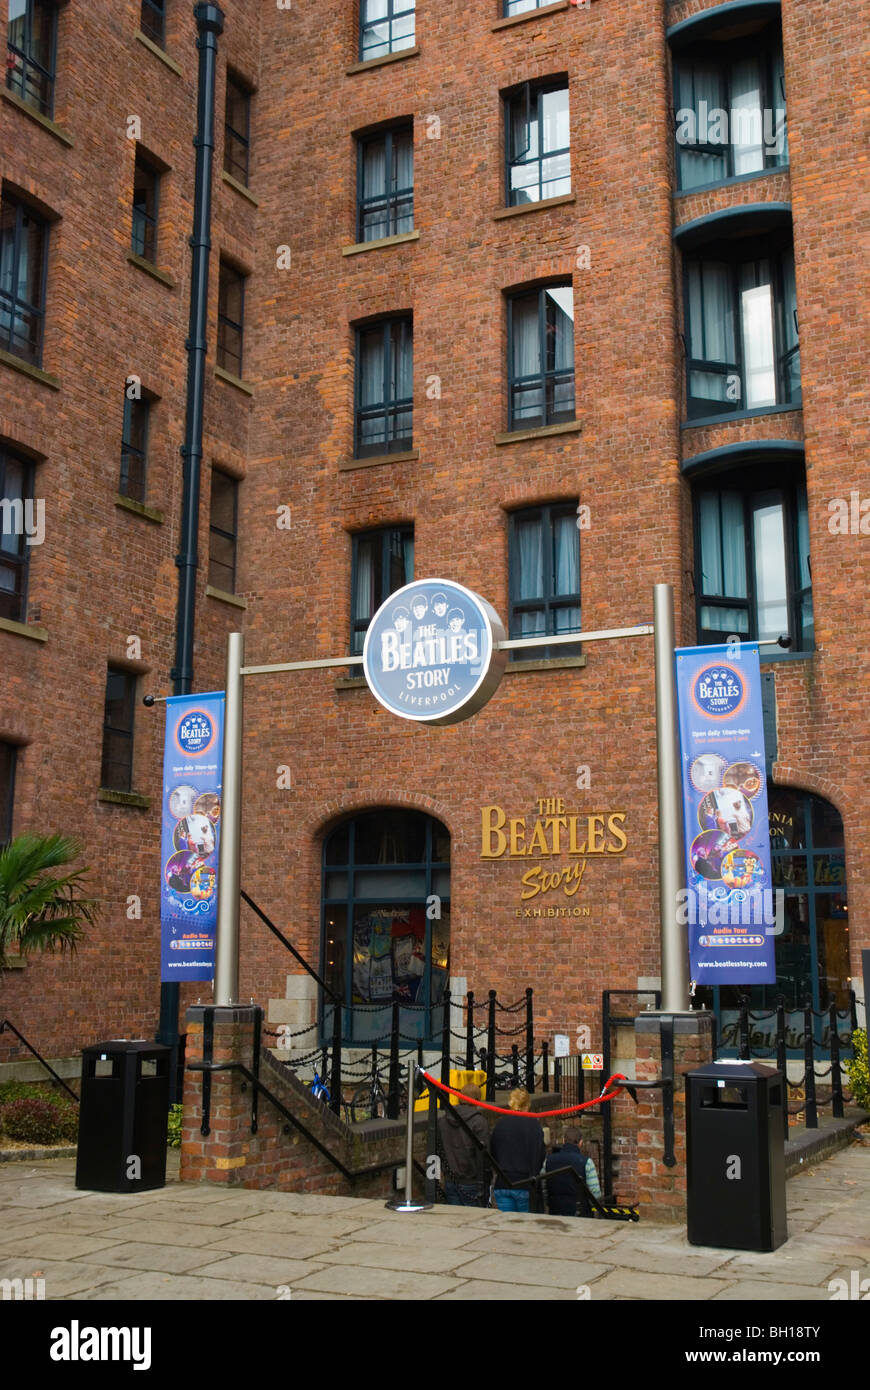 Die Beatles Story außen Albert Dock Komplex Liverpool England UK Mitteleuropa Stockfoto